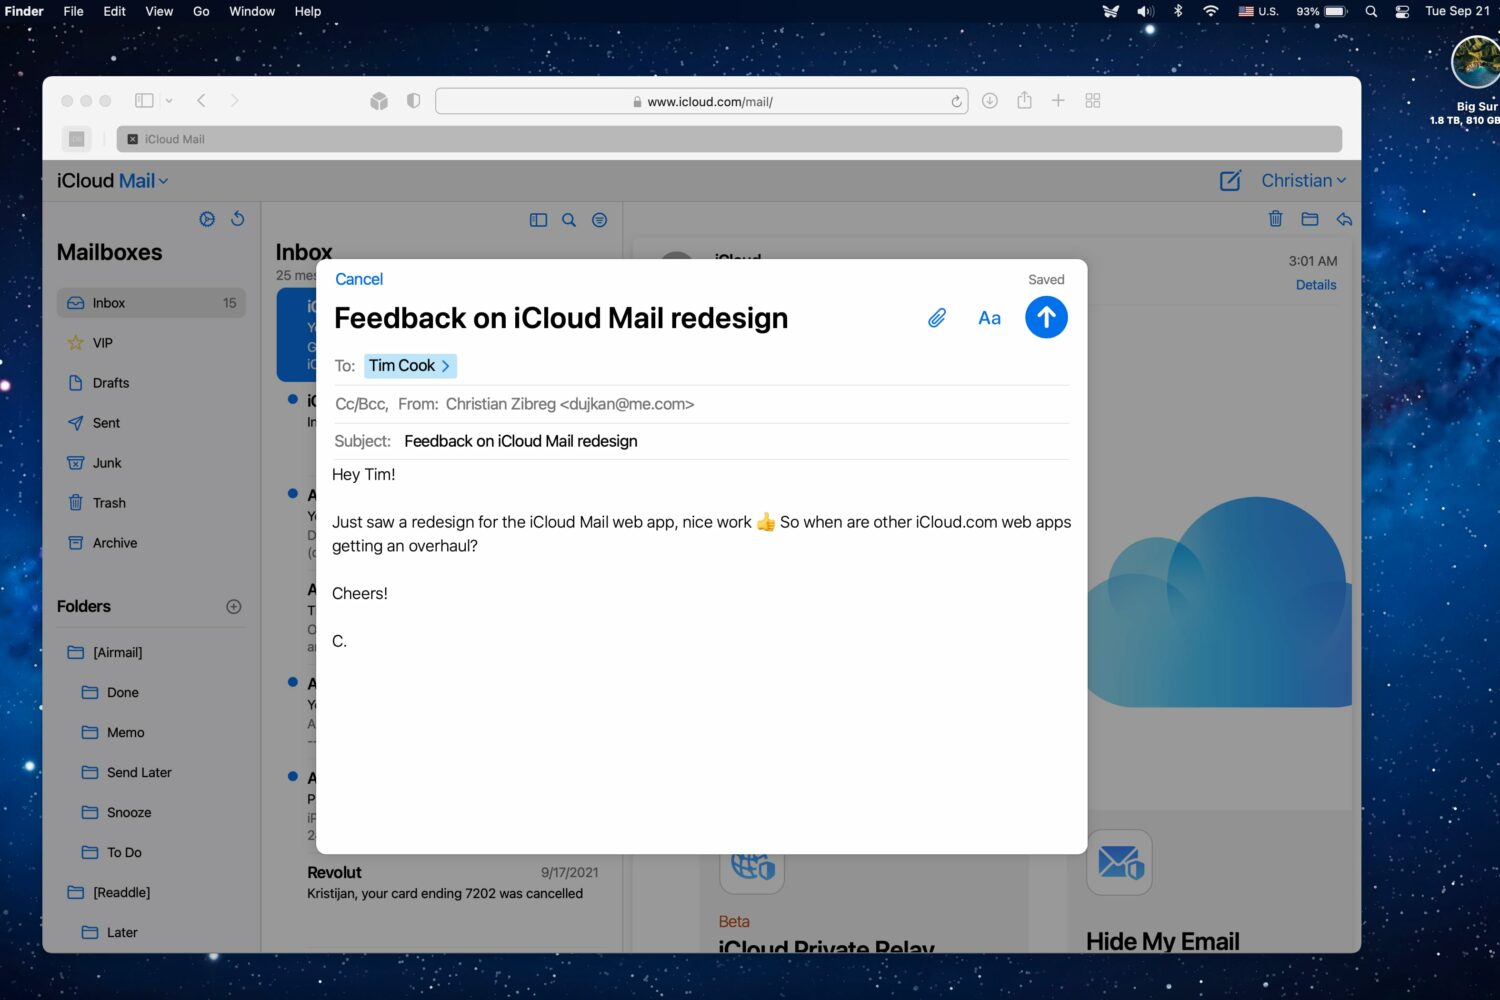 A Mac screenshot showing the iCloud Mail web app running in Safari